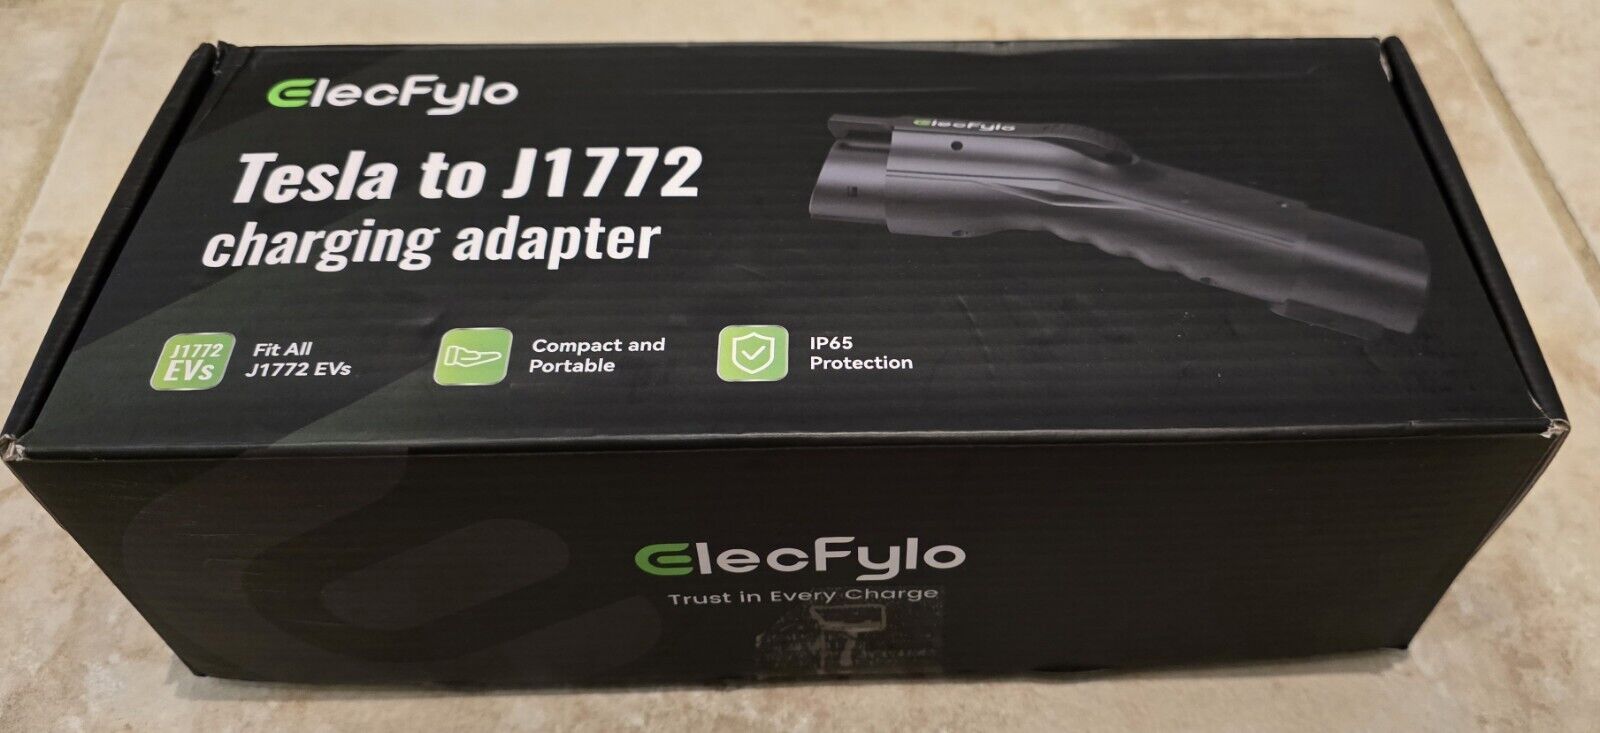 ElecFylo Tesla to J1772 Charging Adapter - Open Box